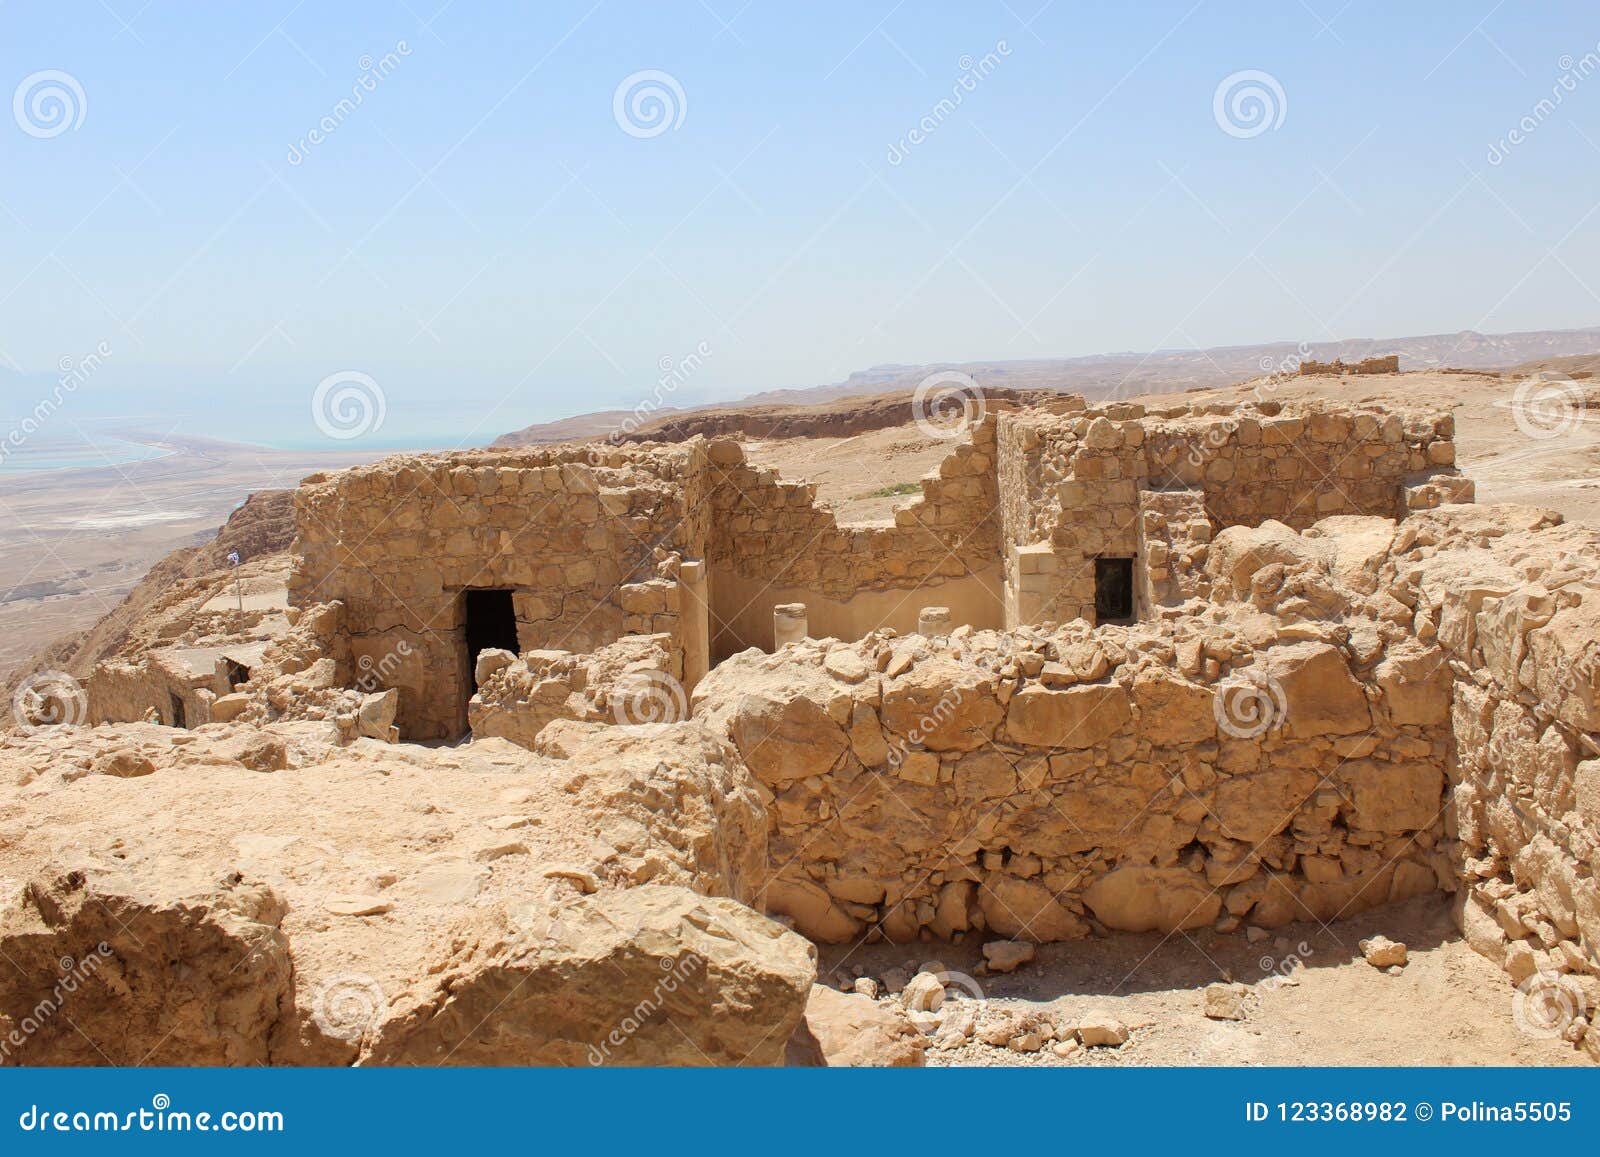 the masada fortress